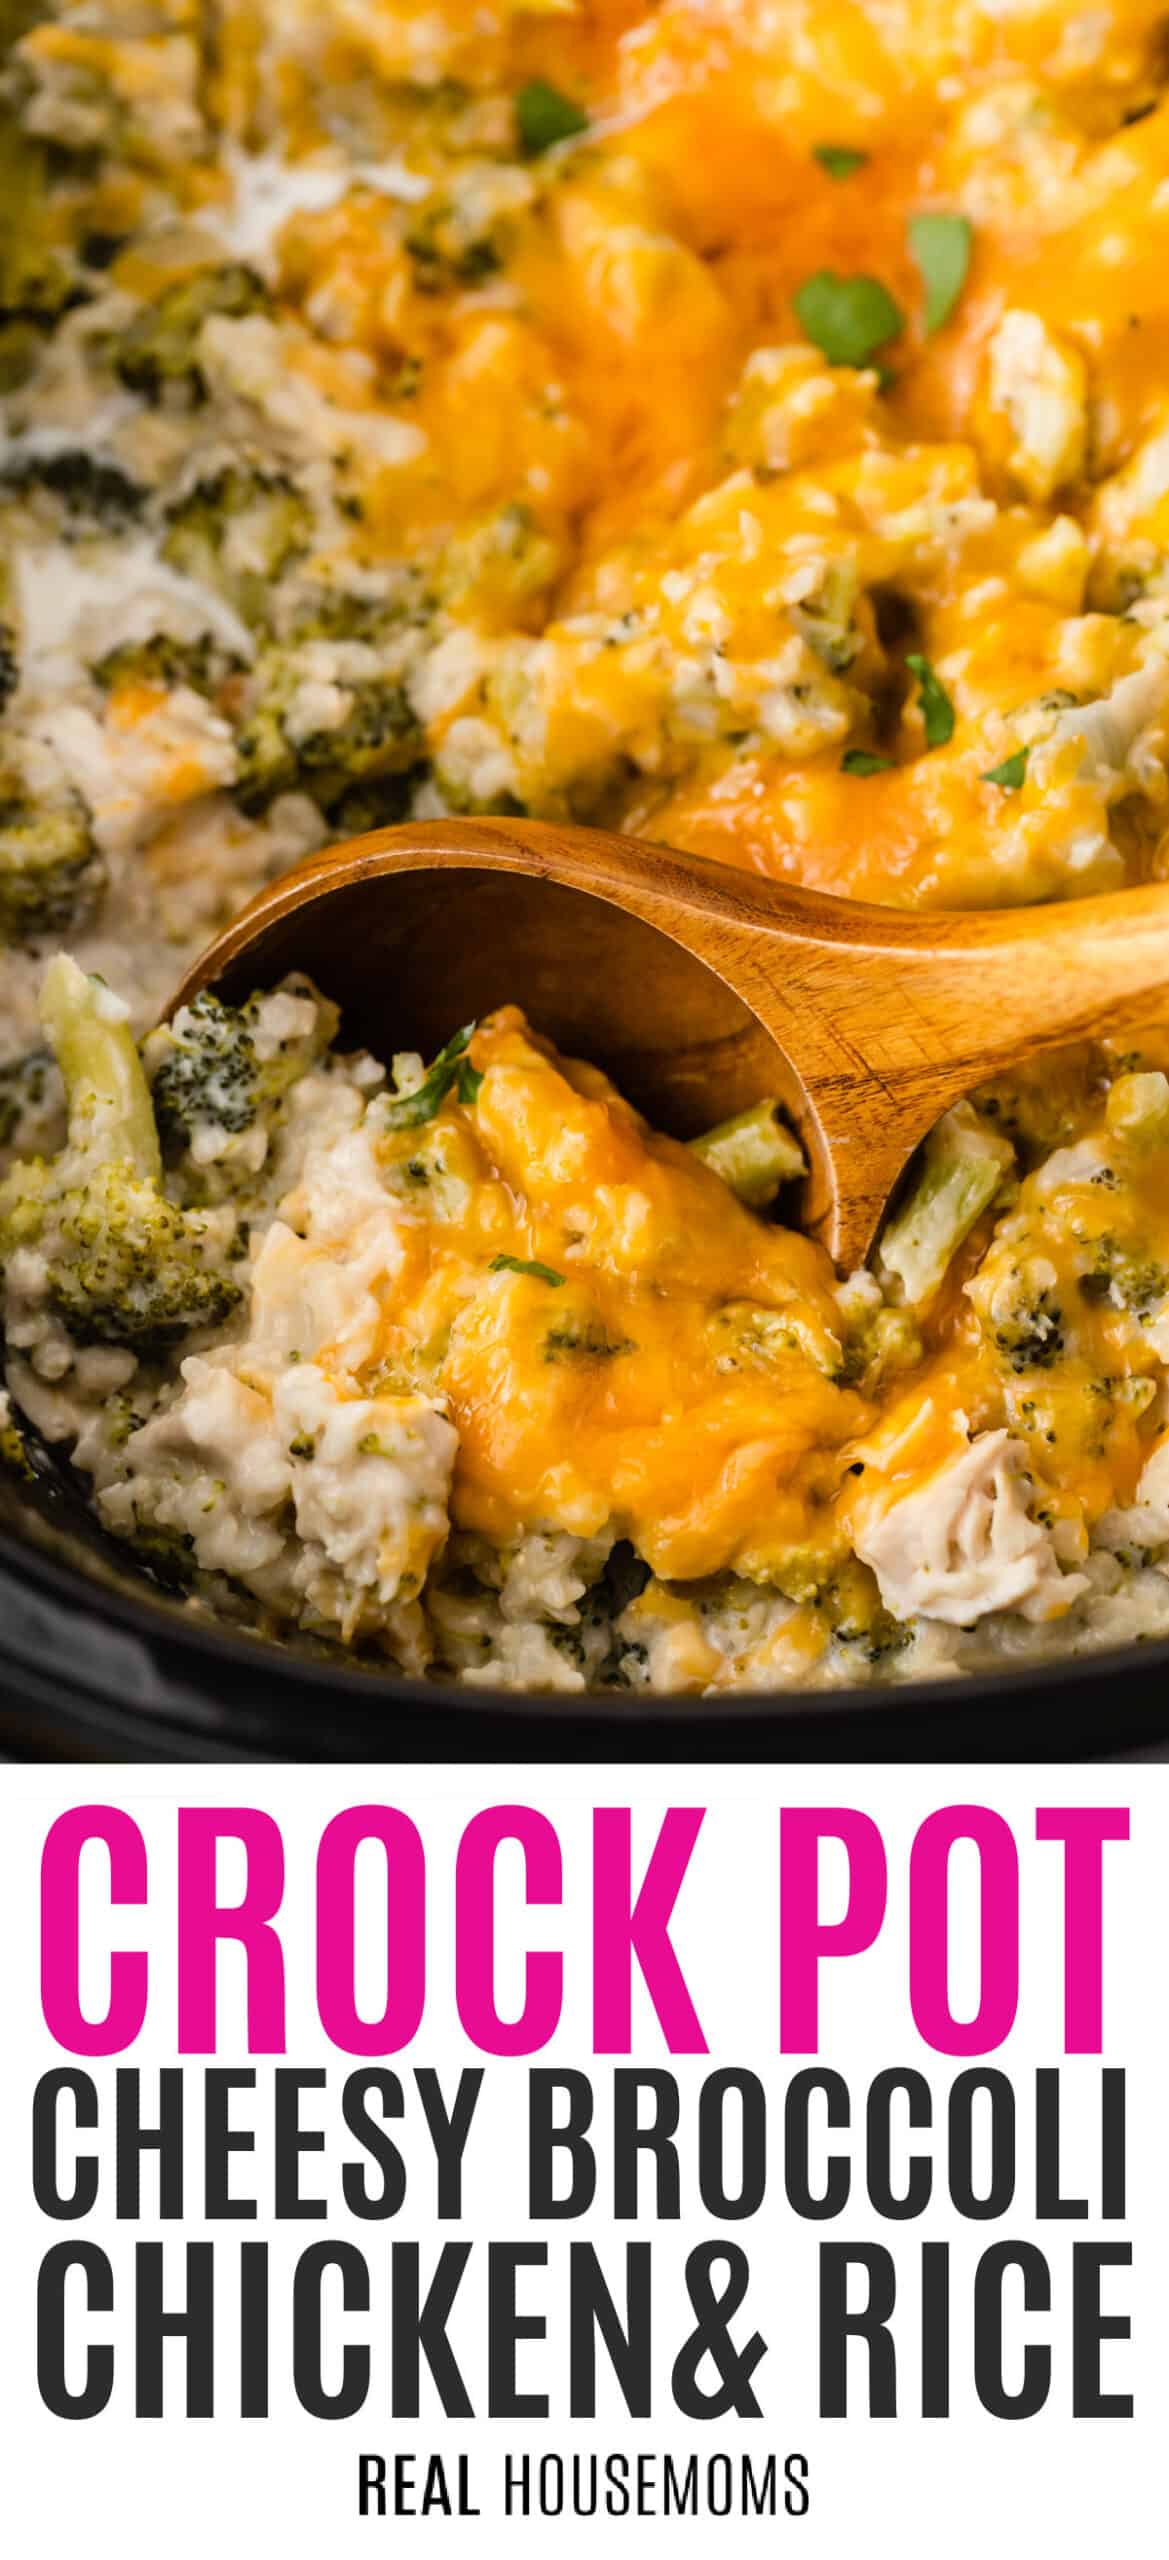 https://realhousemoms.com/wp-content/uploads/Crock-Pot-Cheesy-Broccoli-Chicken-and-Rice-HERO-scaled.jpg